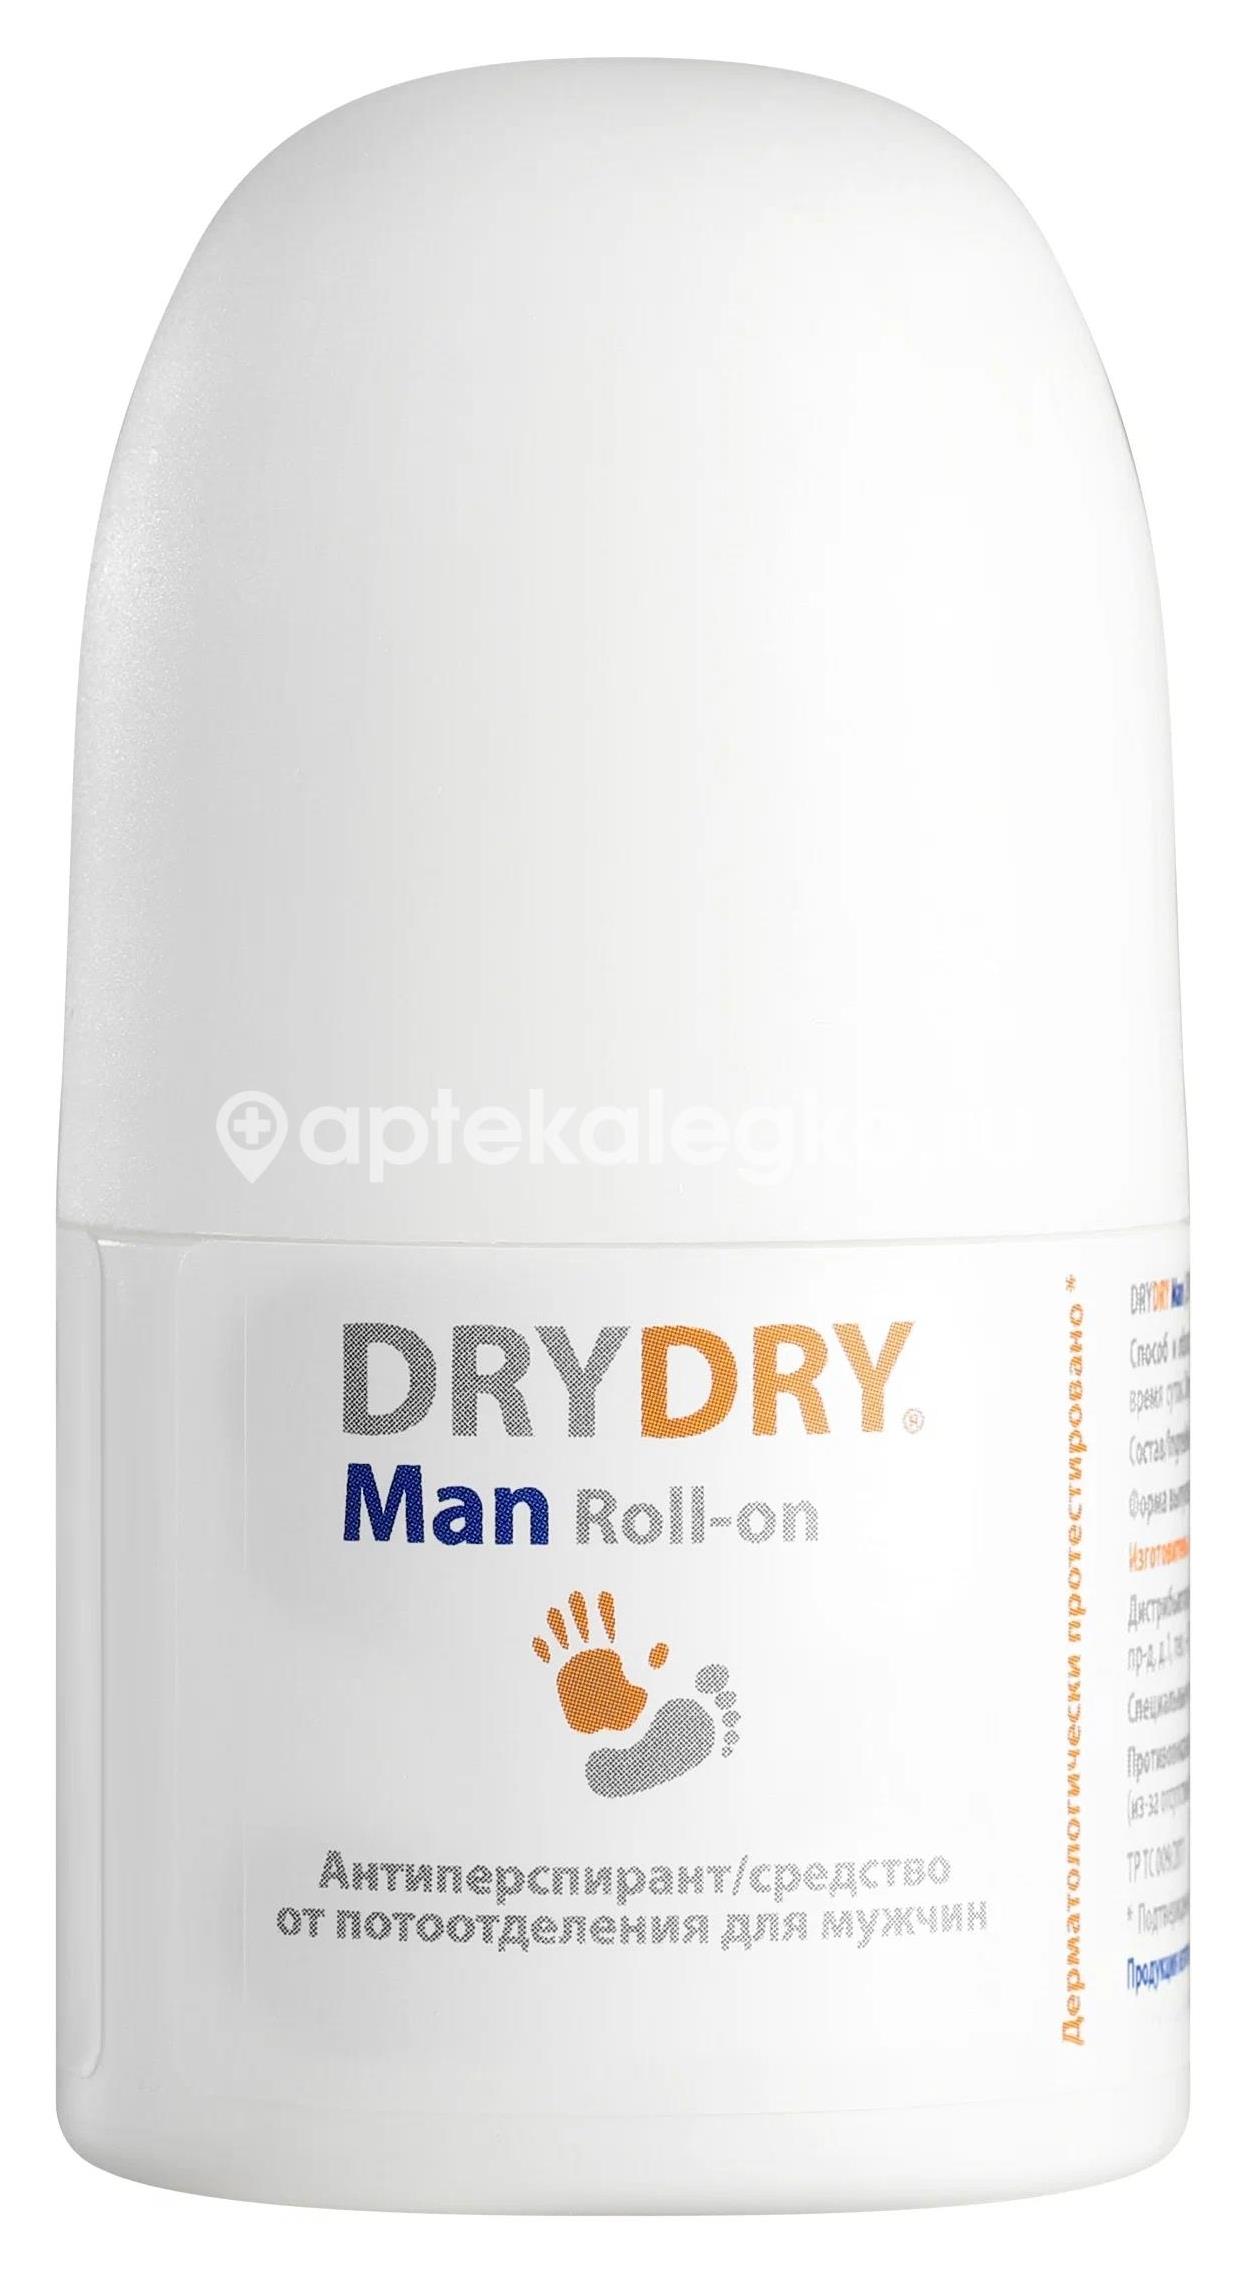 Dry dry дезодорант отзывы. Дезодорант Dry Dry Classic. Антиперспирант DRYDRY deo, 50 мл. Драй драй шариковый антиперспирант. Dry Dry шариковый дезодорант.